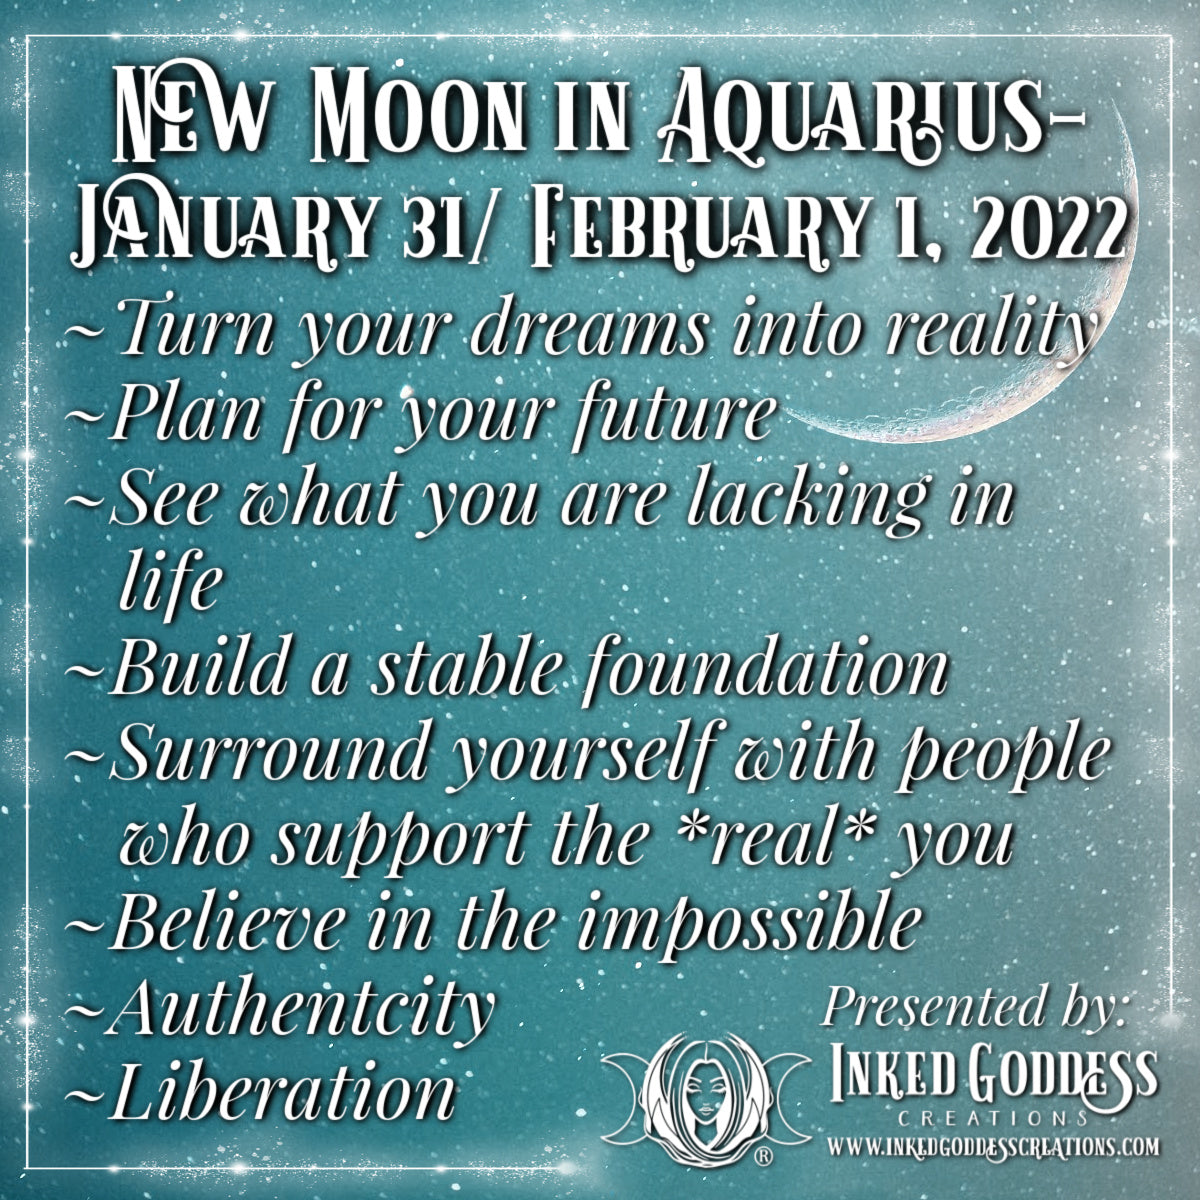 New Moon in Aquarius- January 31/February 1, 2022